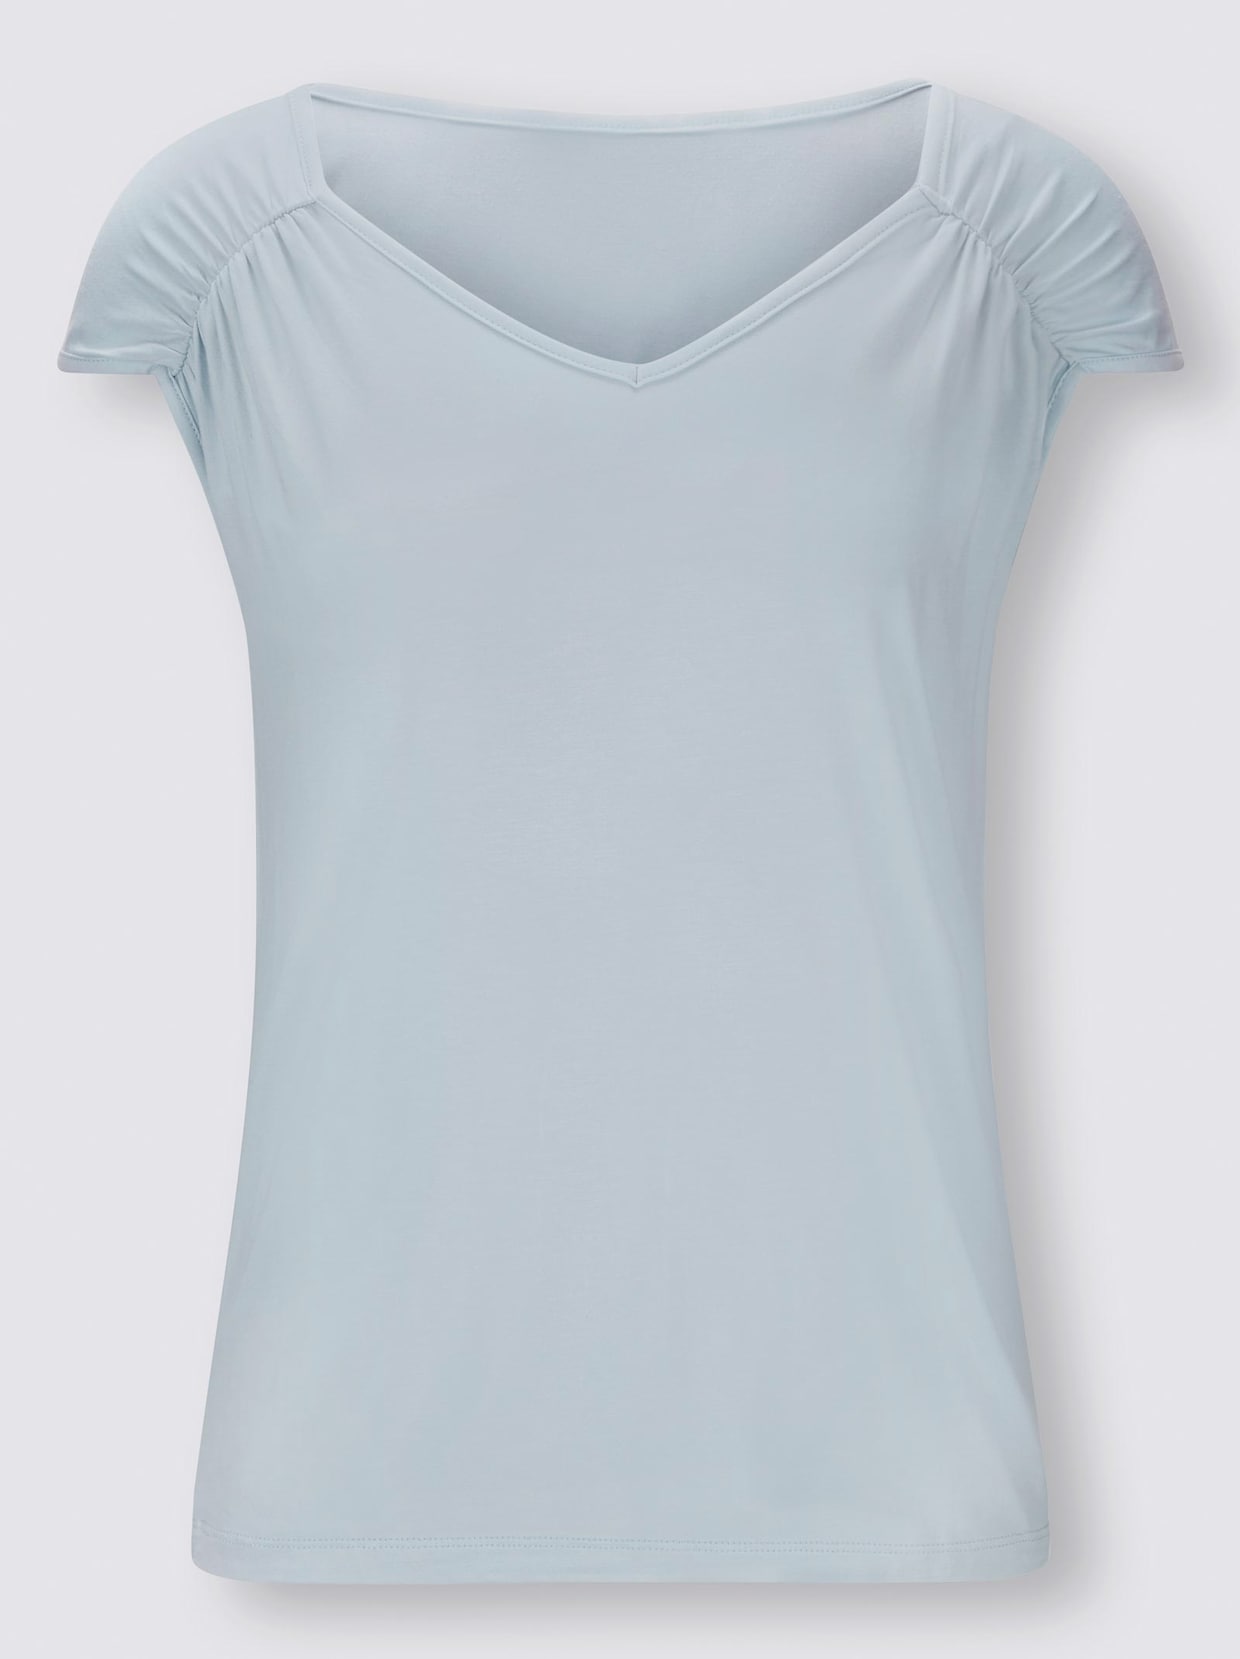 Ashley Brooke Shirt - mint